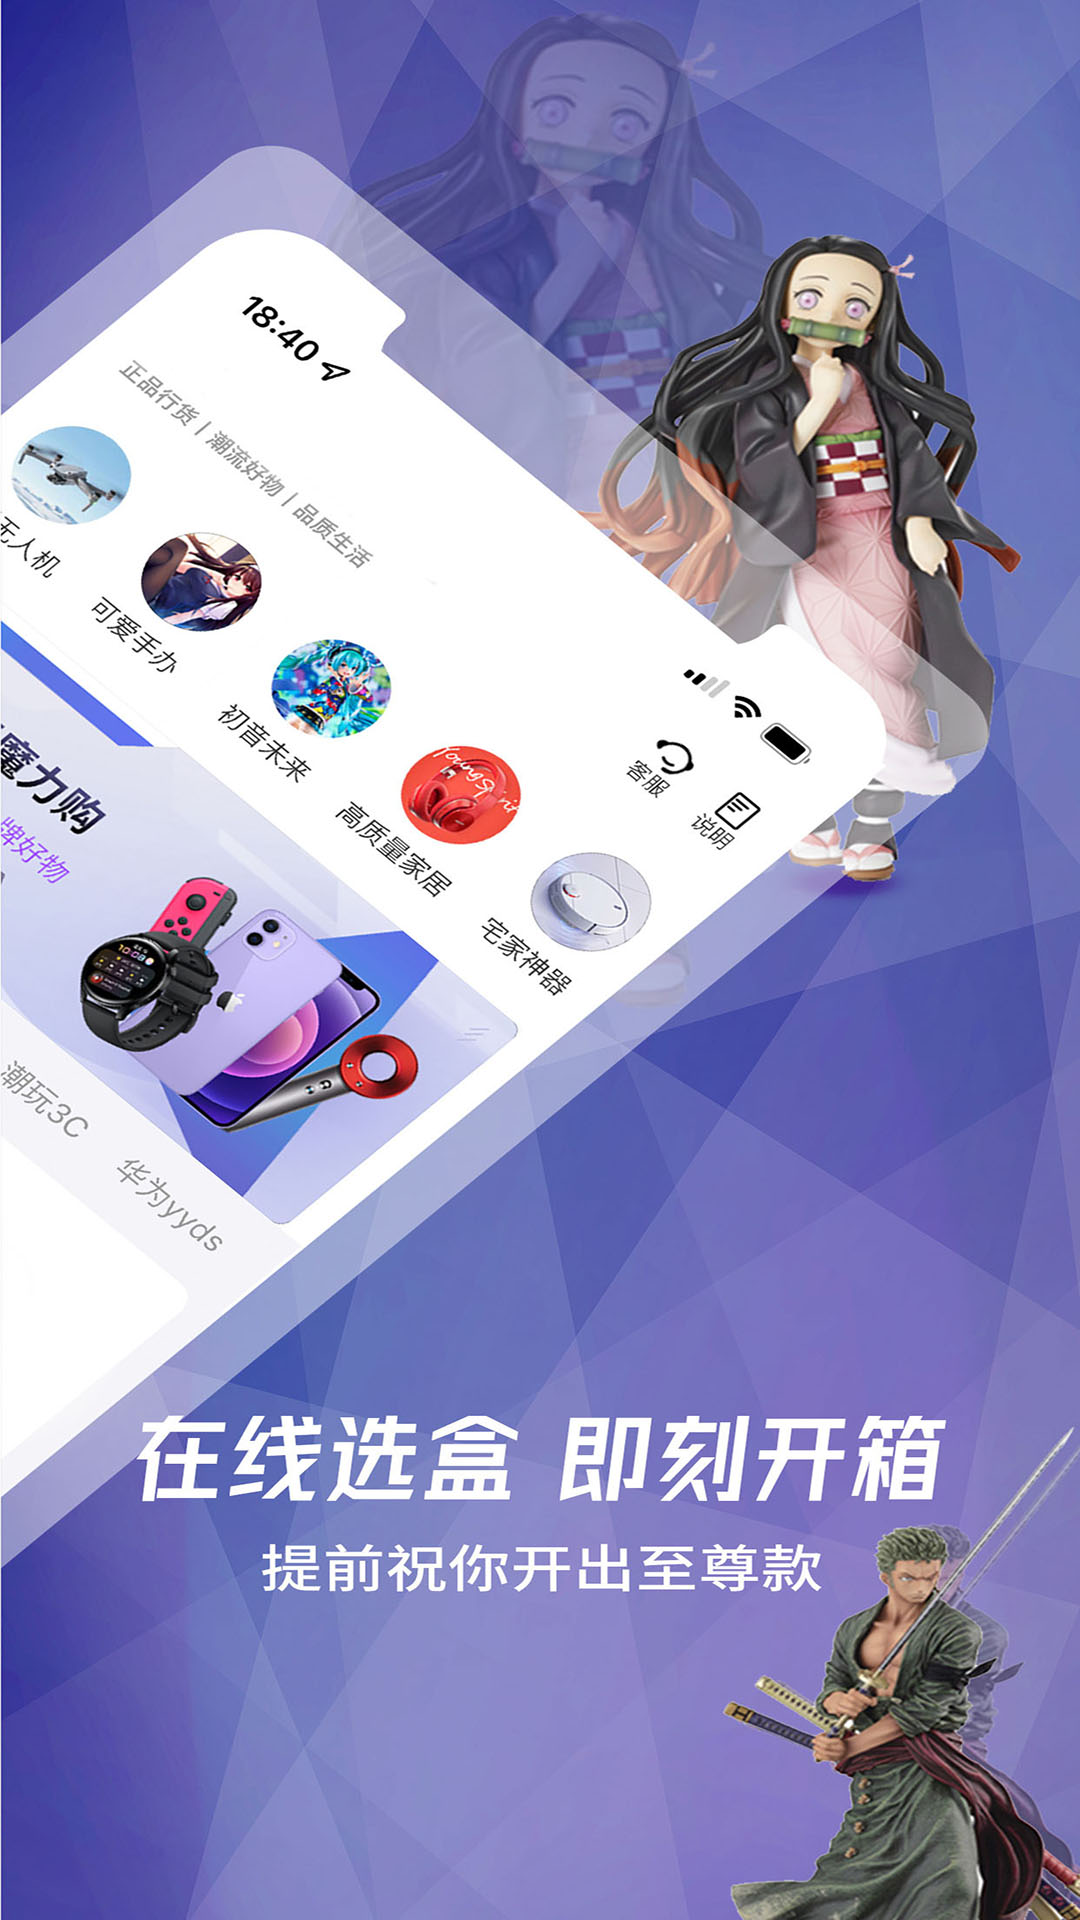 小星潮app1.26.0